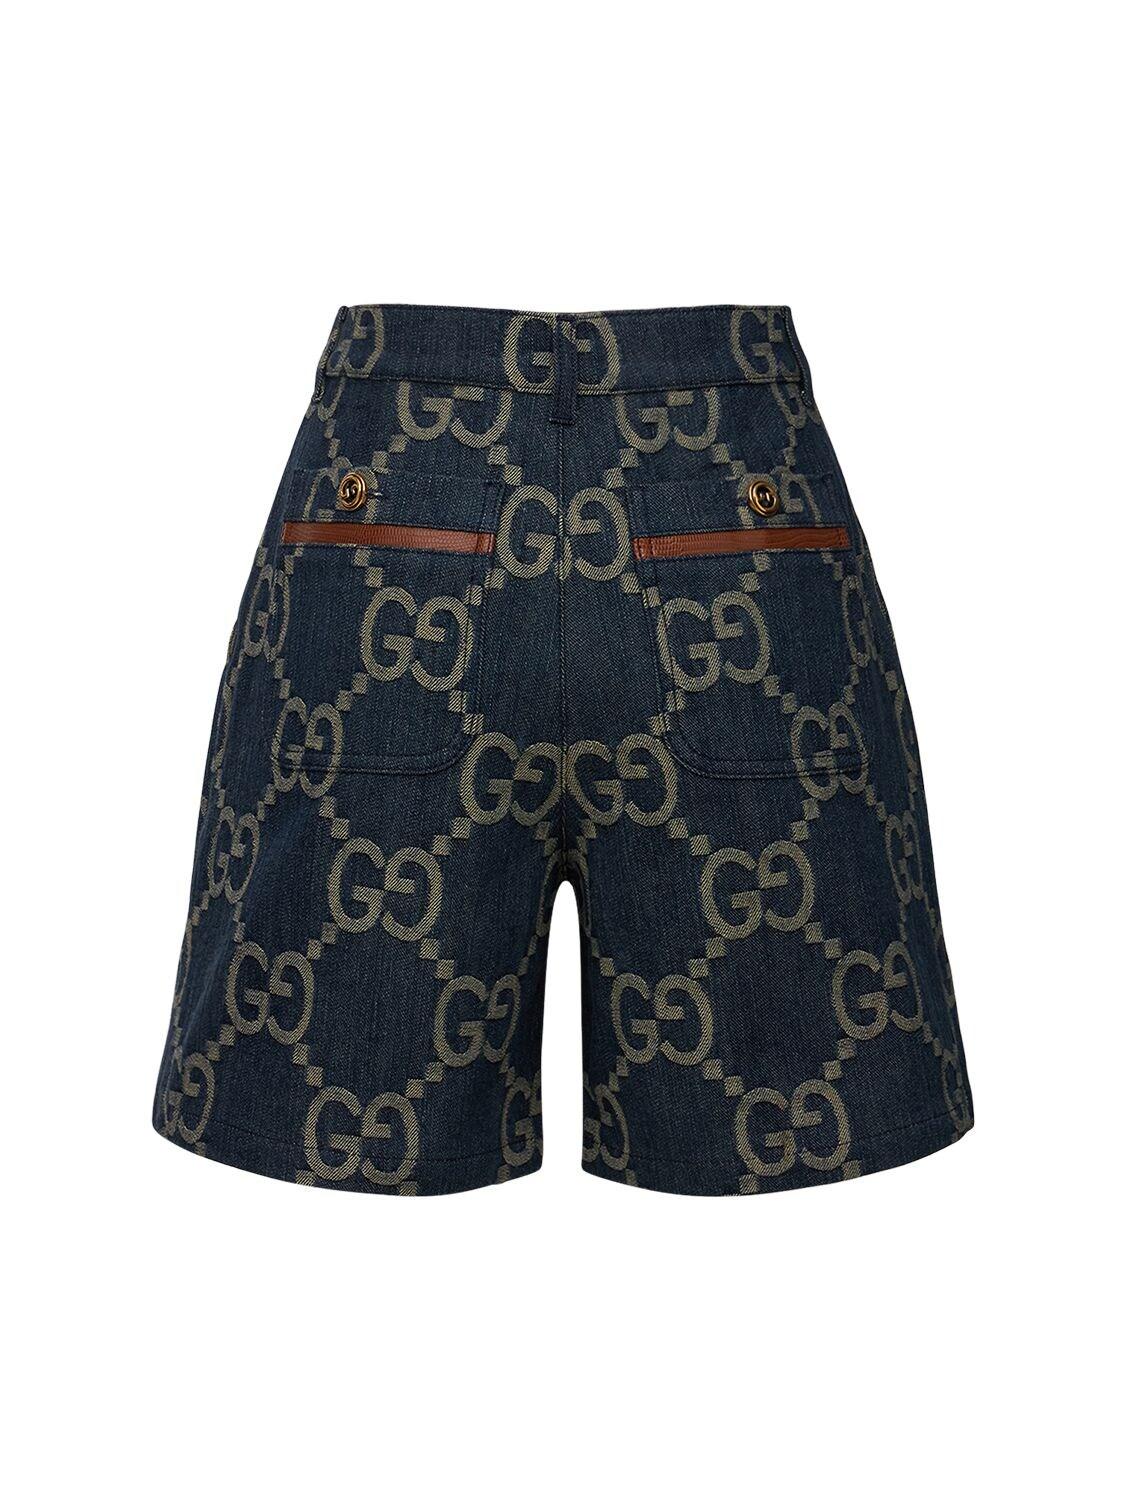 Gucci Jumbo Gg Cotton Denim Shorts in Blue/Ivory (Blue) | Lyst